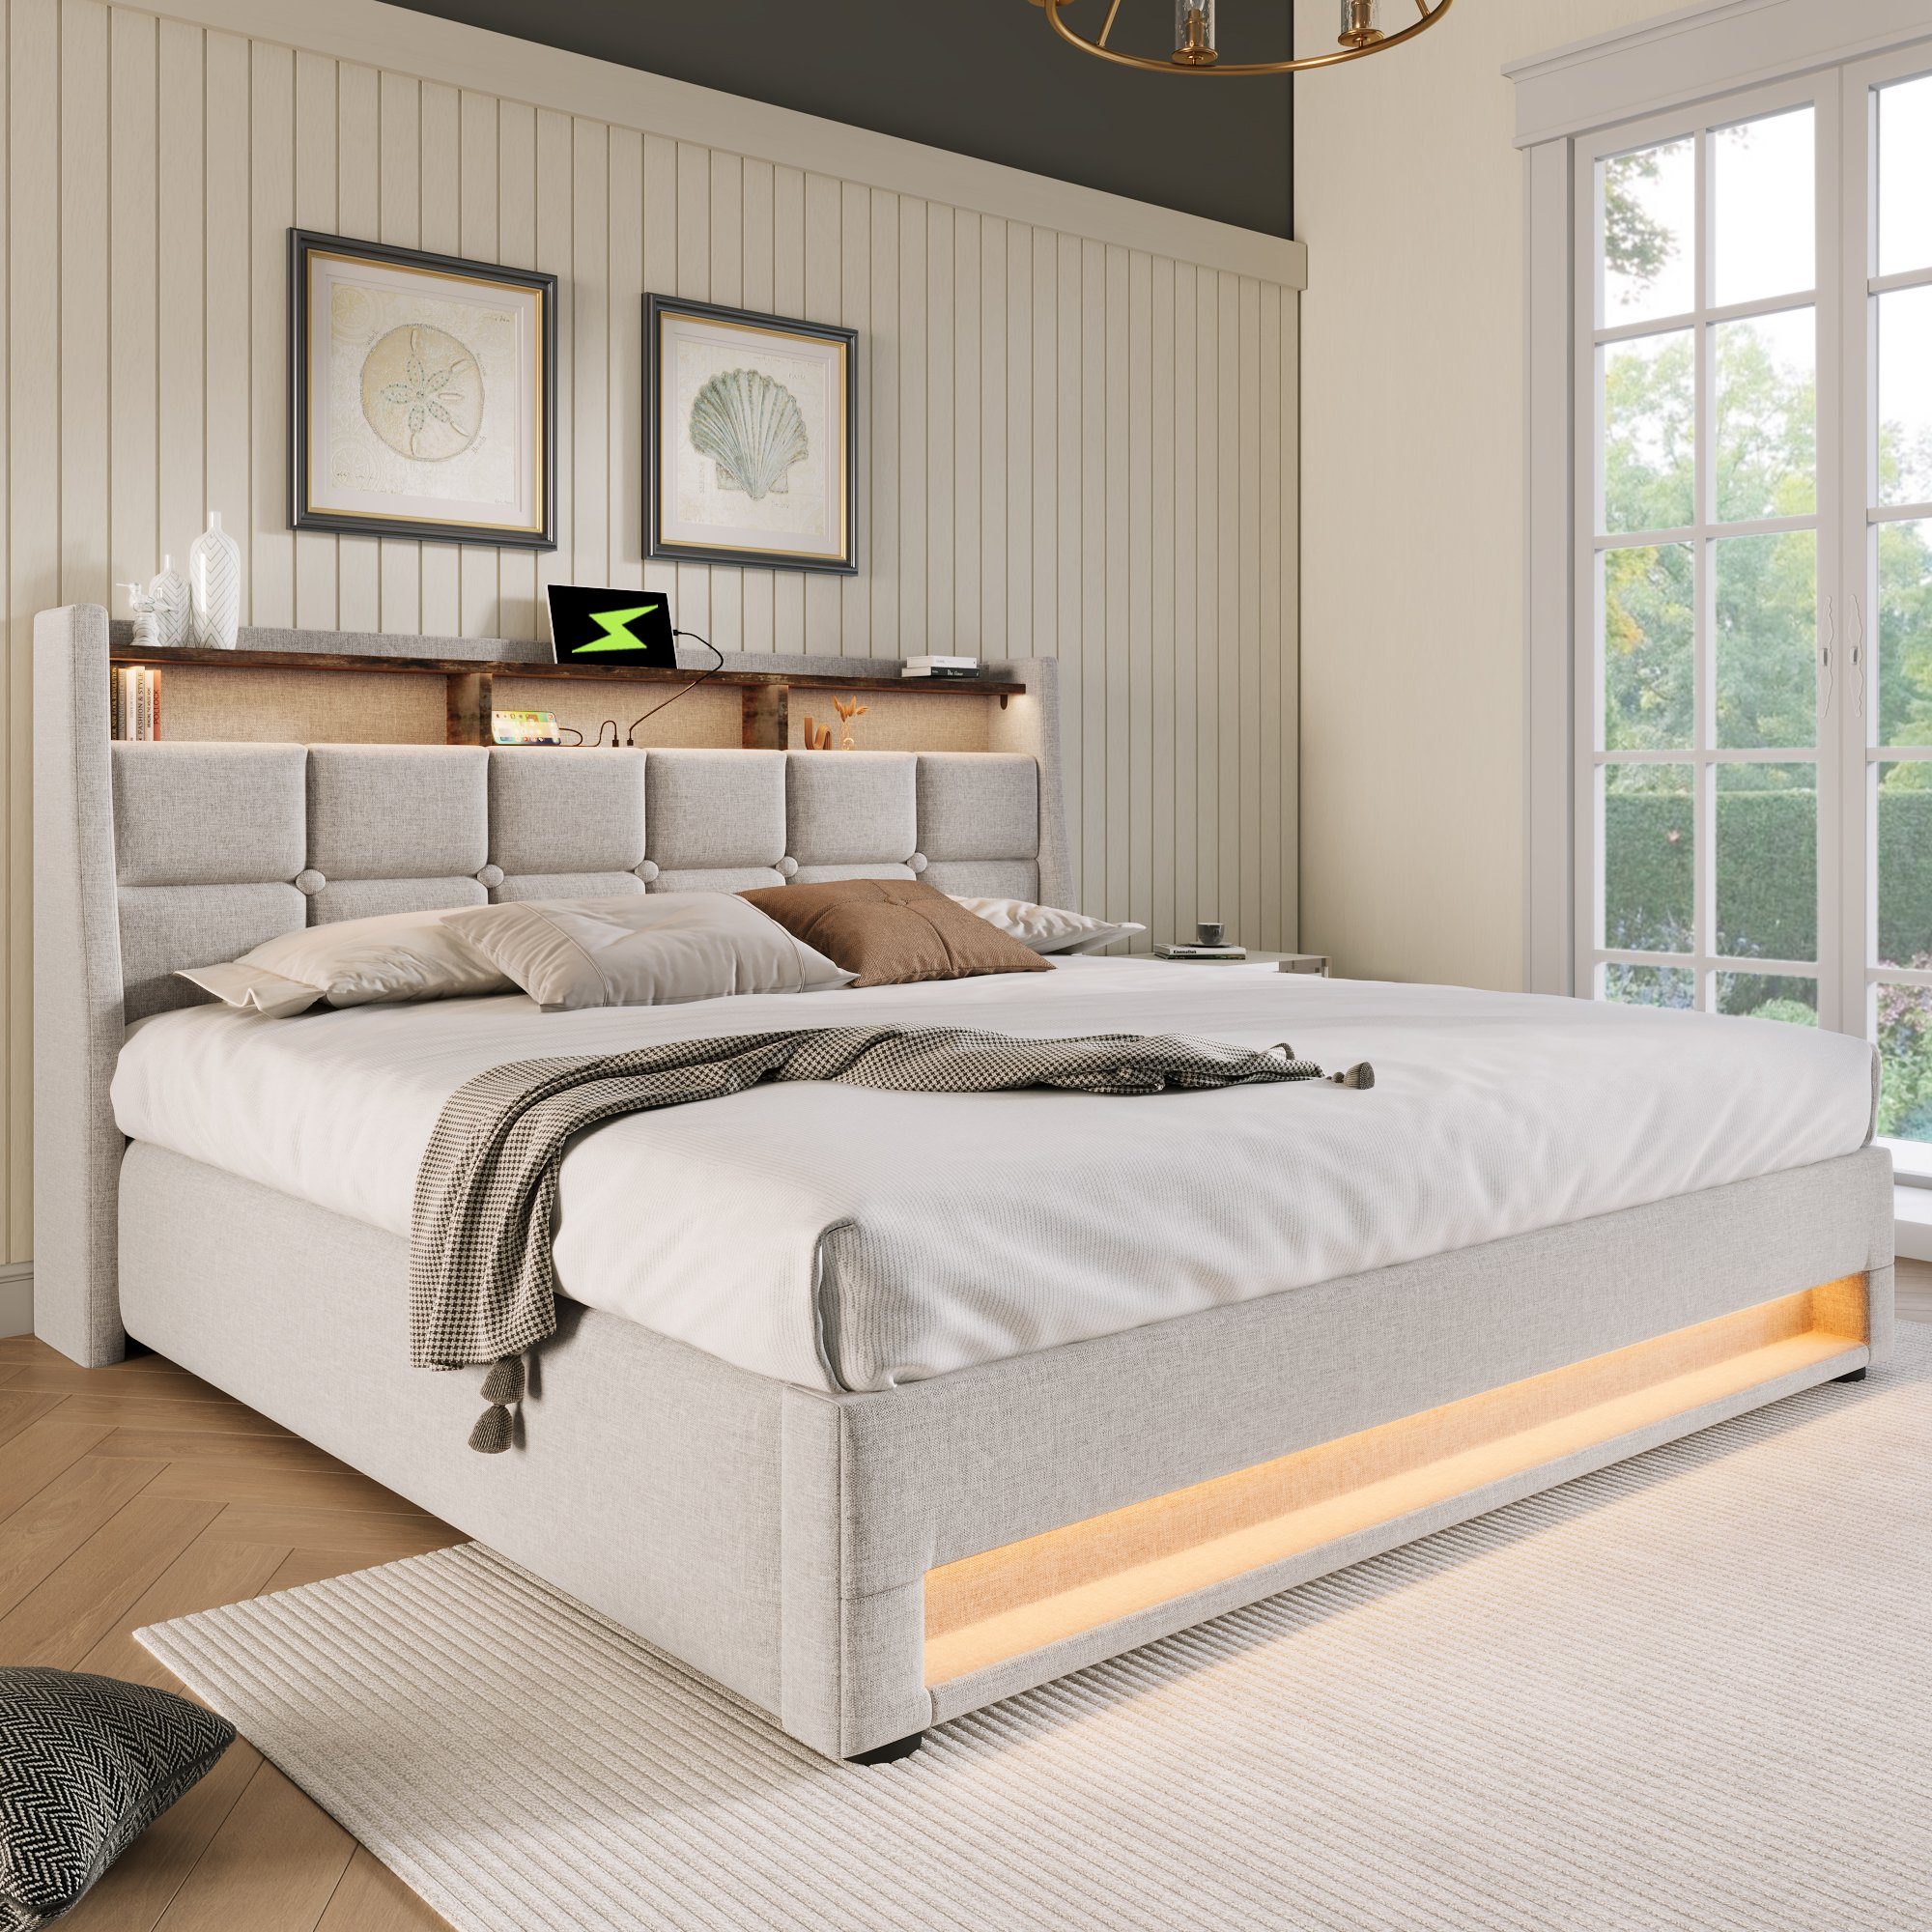 WISHDOR Polsterbett Bett (LED Doppelbett Jugendbett mit USB/Typ-C Ladeanschluss), 180x200cm,Ohne Matratze Beige